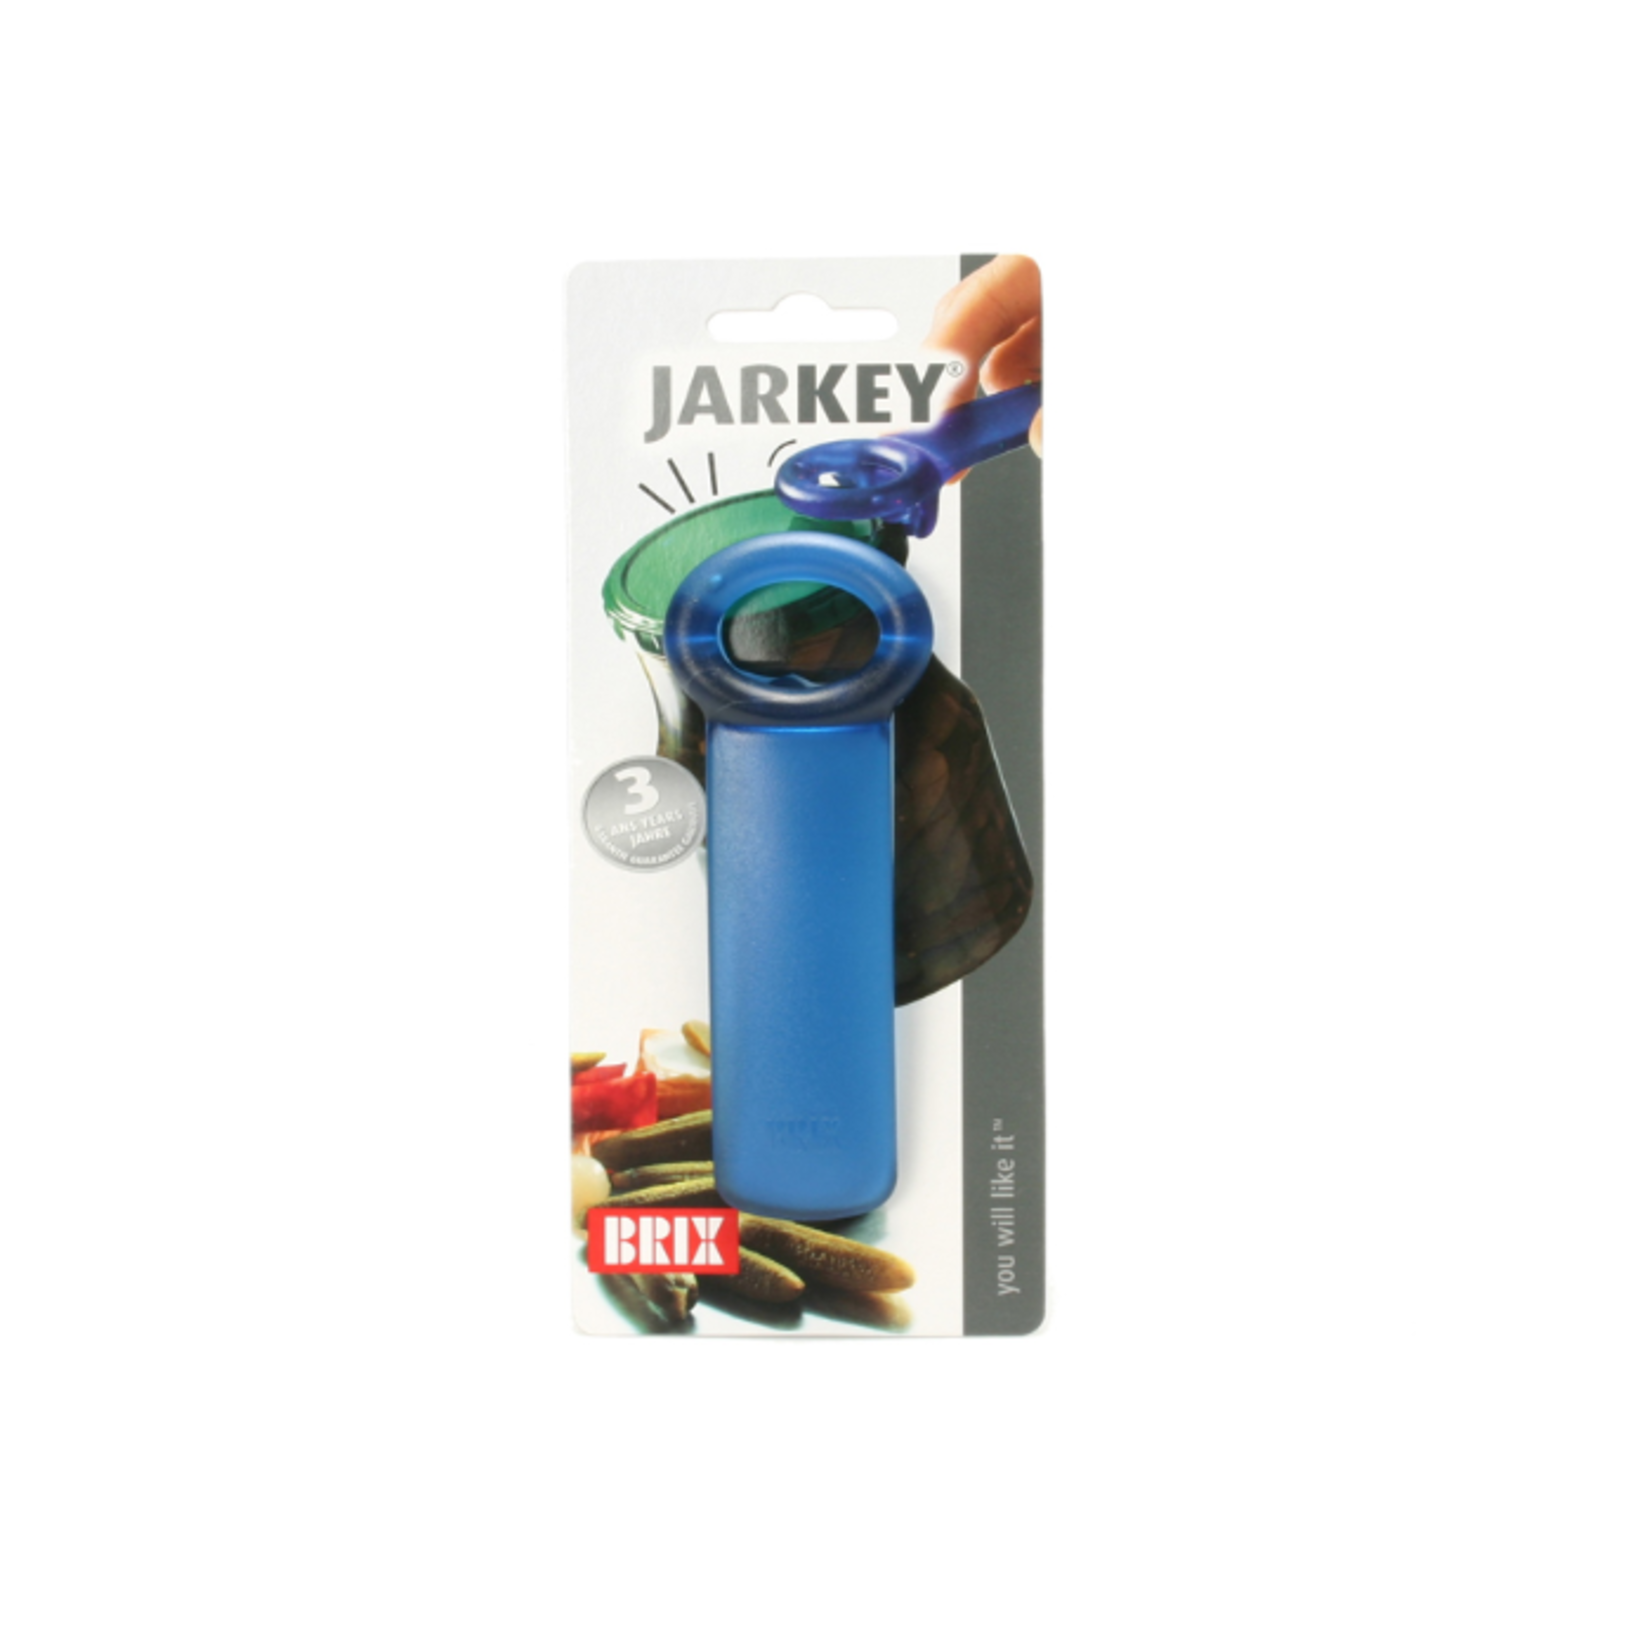 JarKey Jar Opener